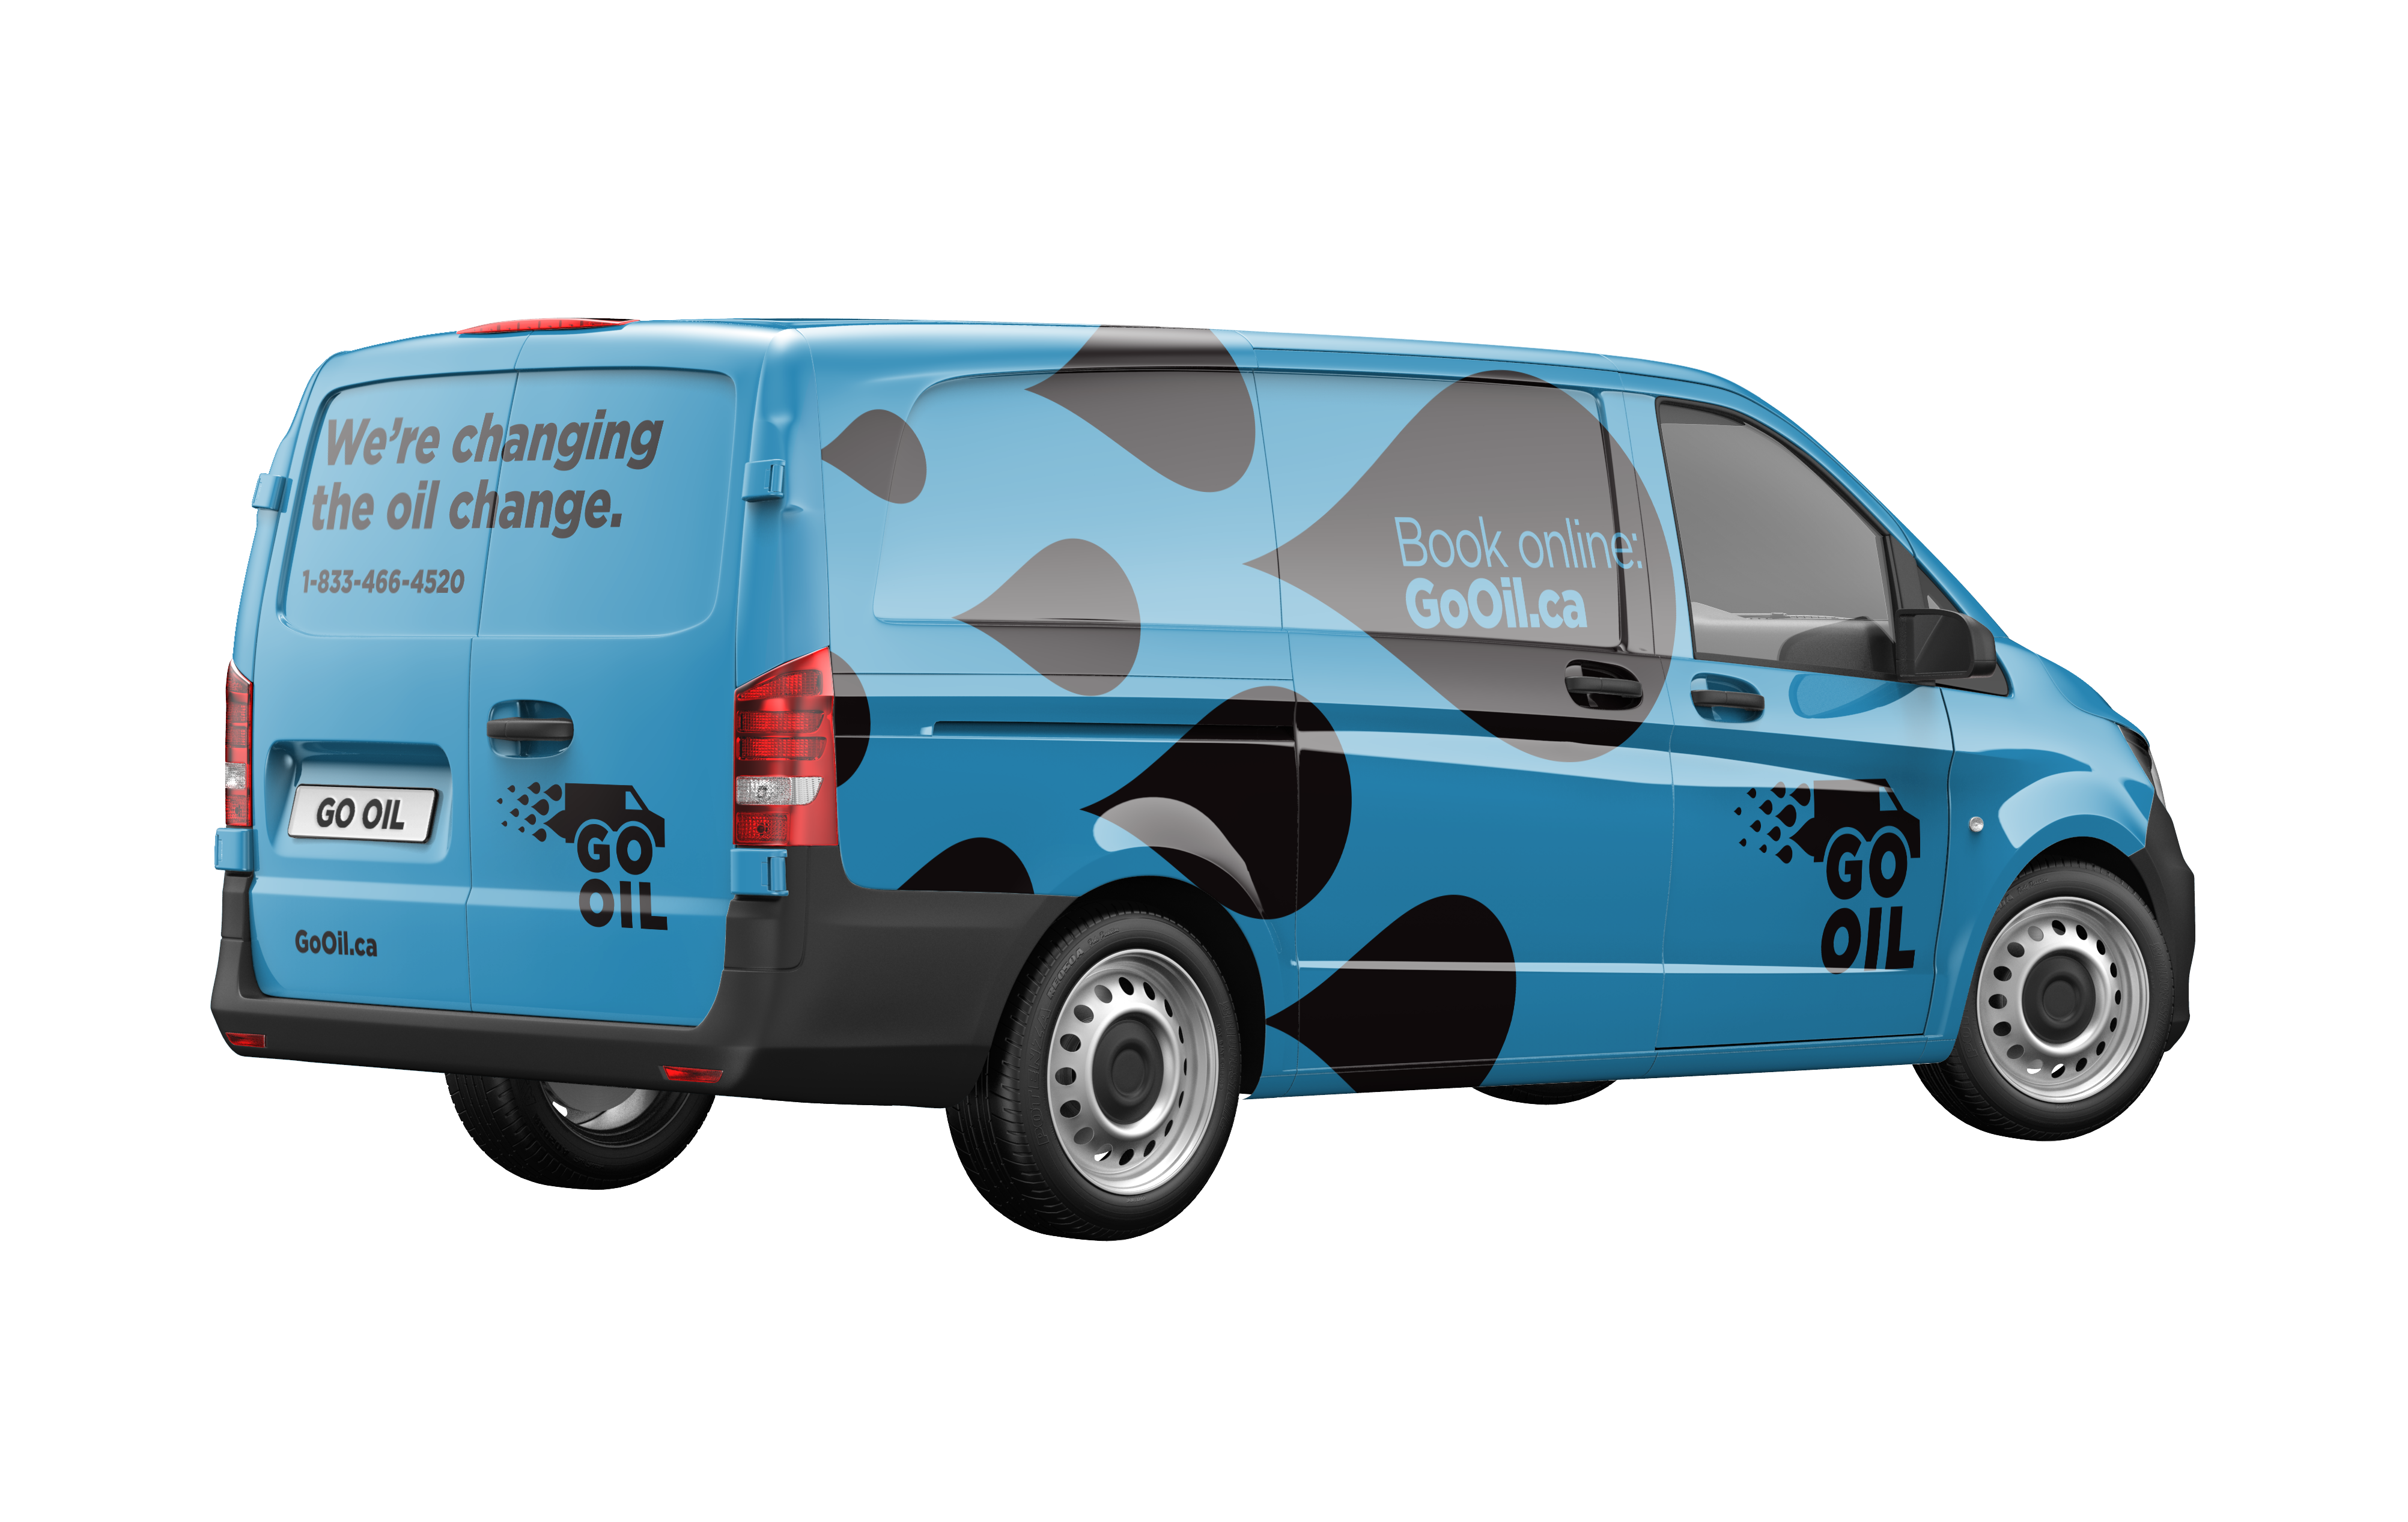 Mobile oil change car